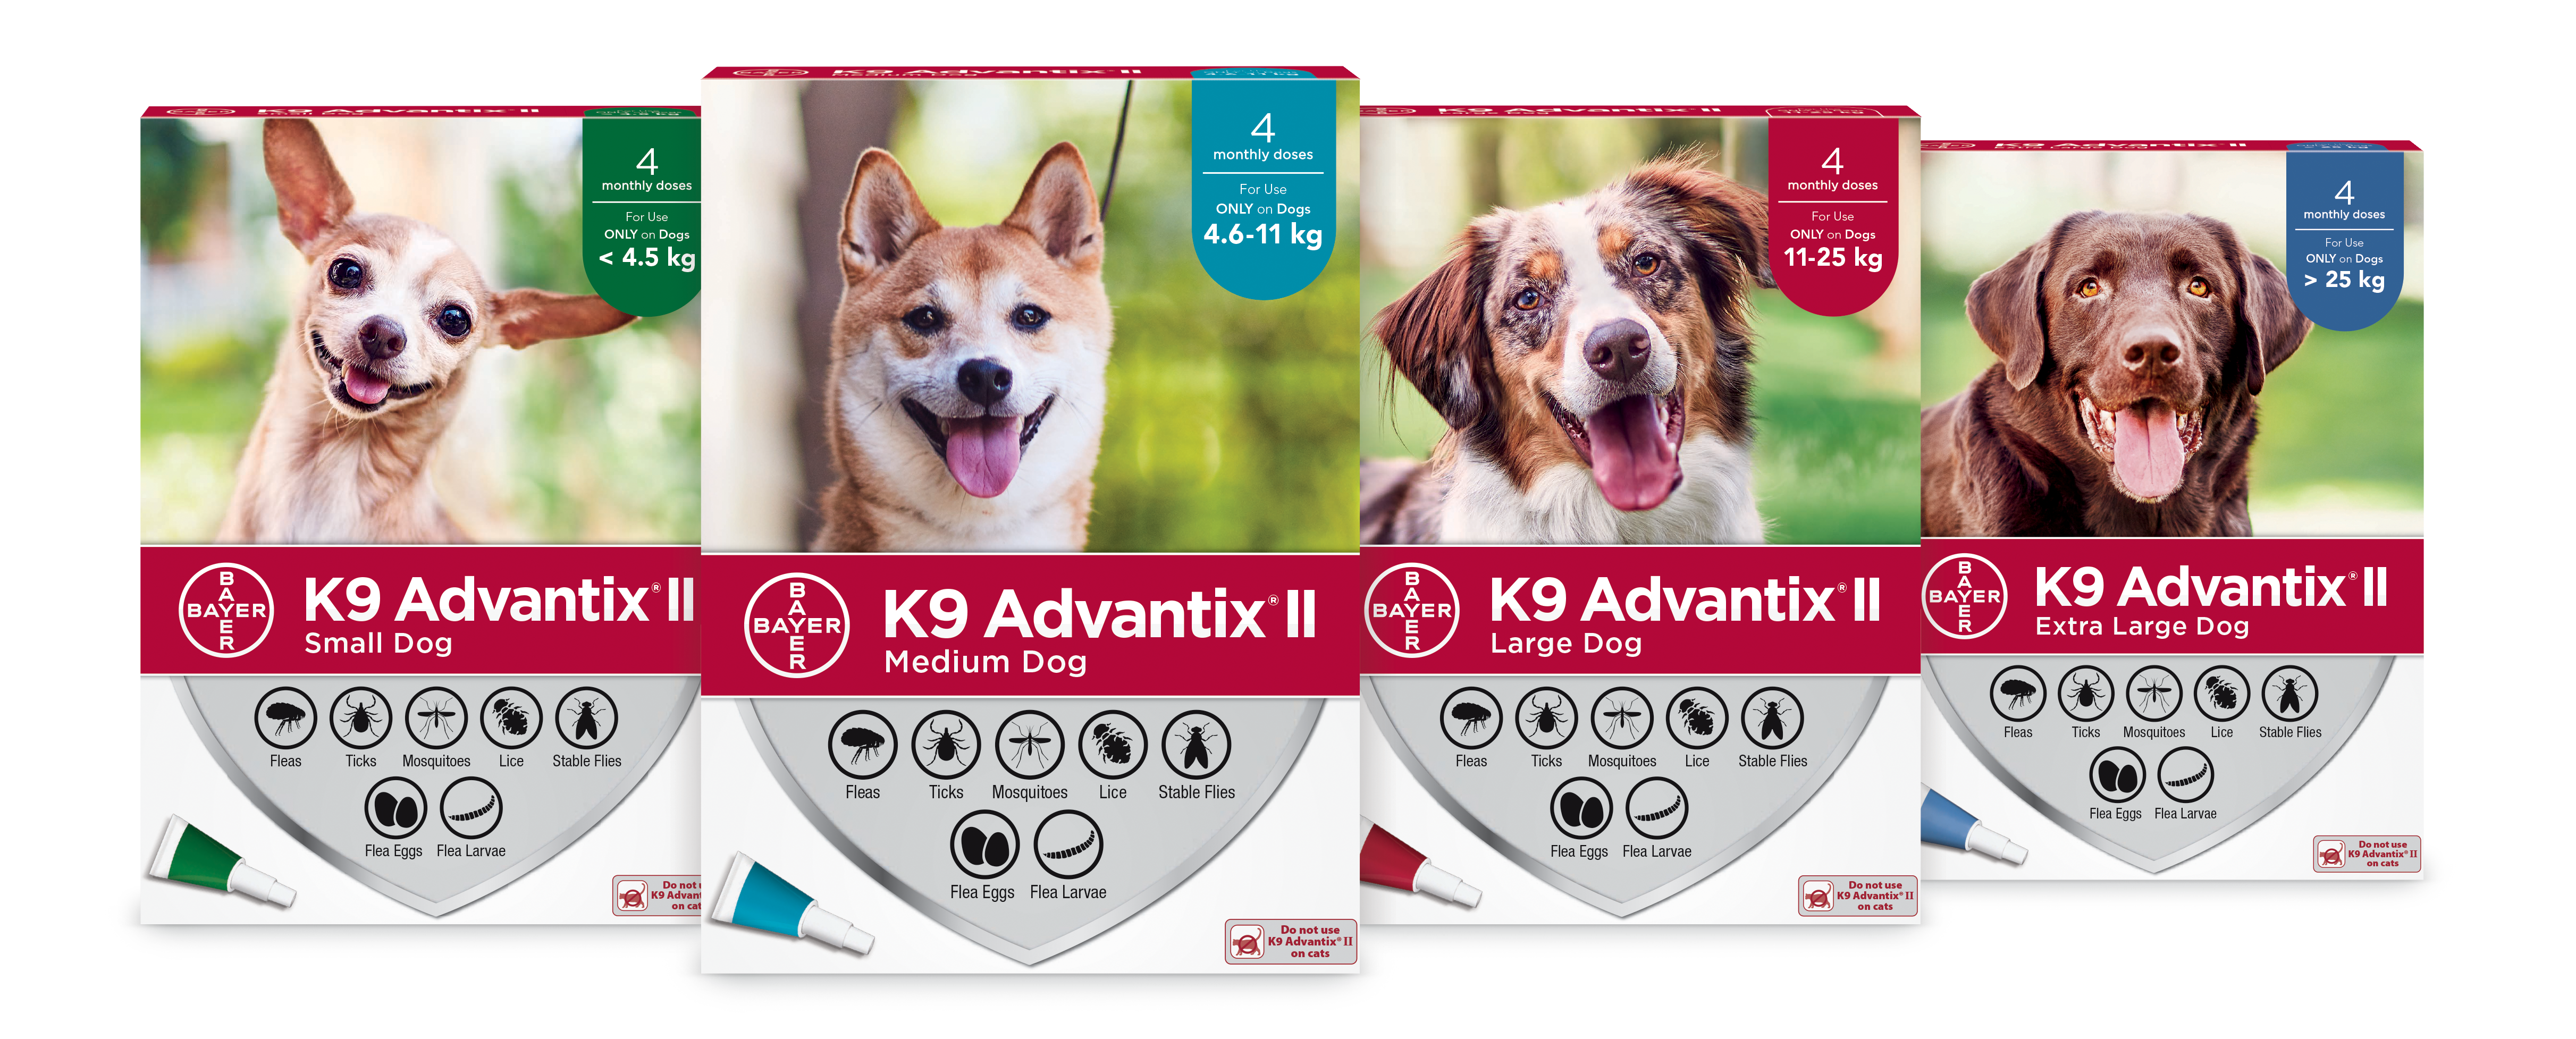 K9 Advantix®II treats fleas, ticks, lice, mosquitoes and stable flies